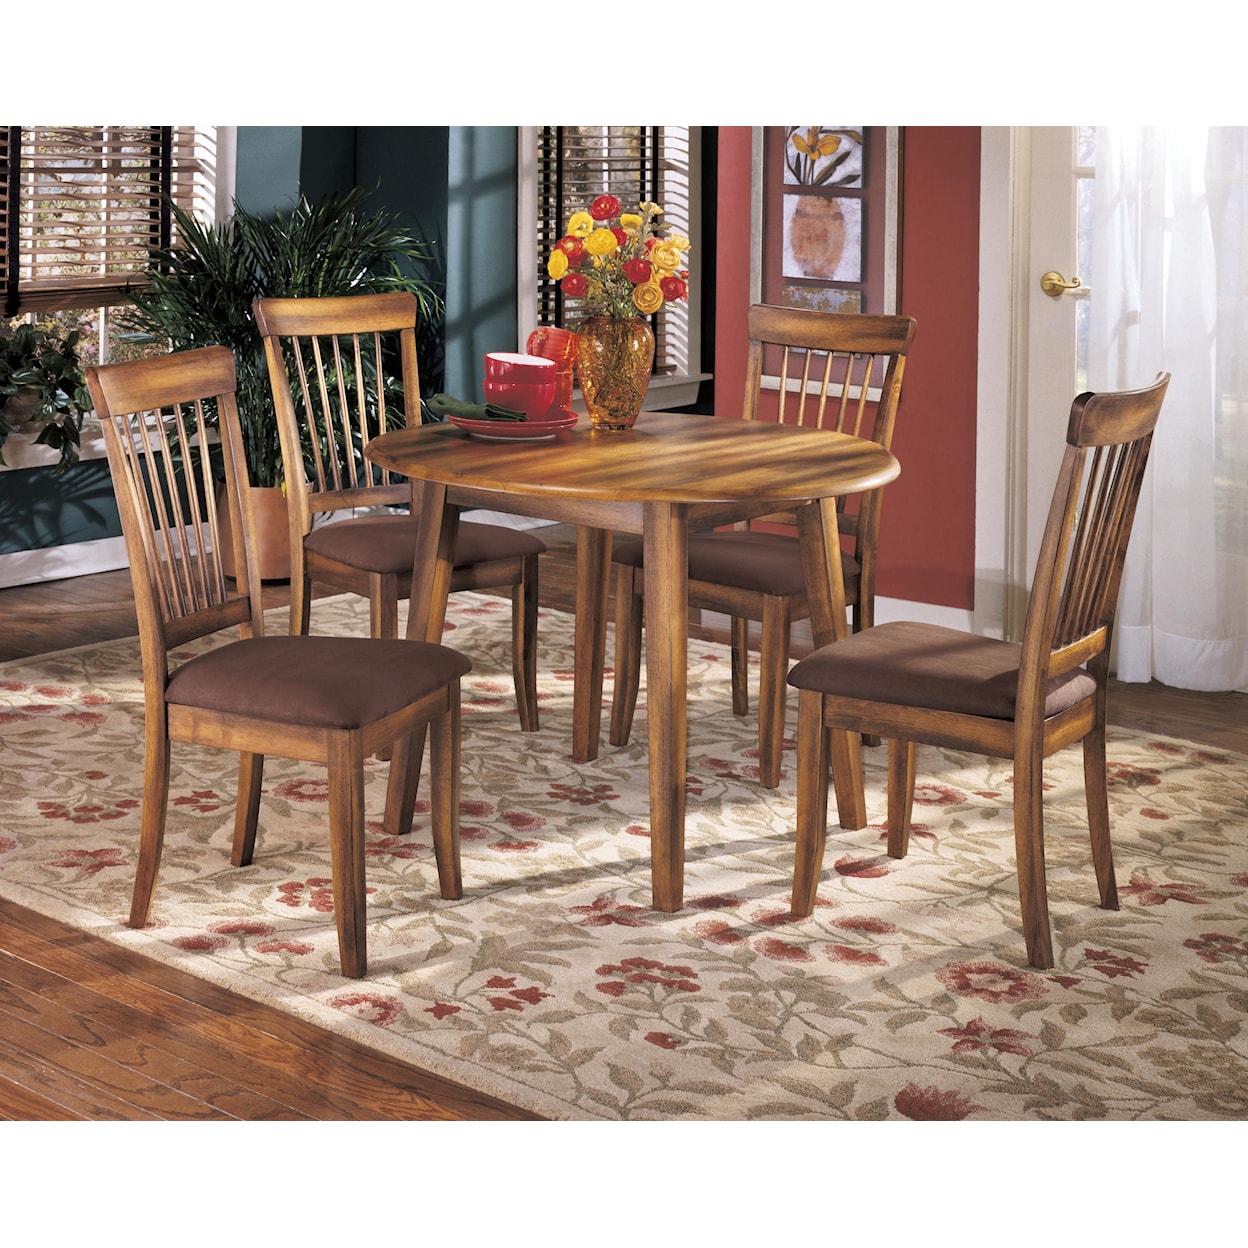 Ashley Furniture Berringer Round Drop Leaf Table